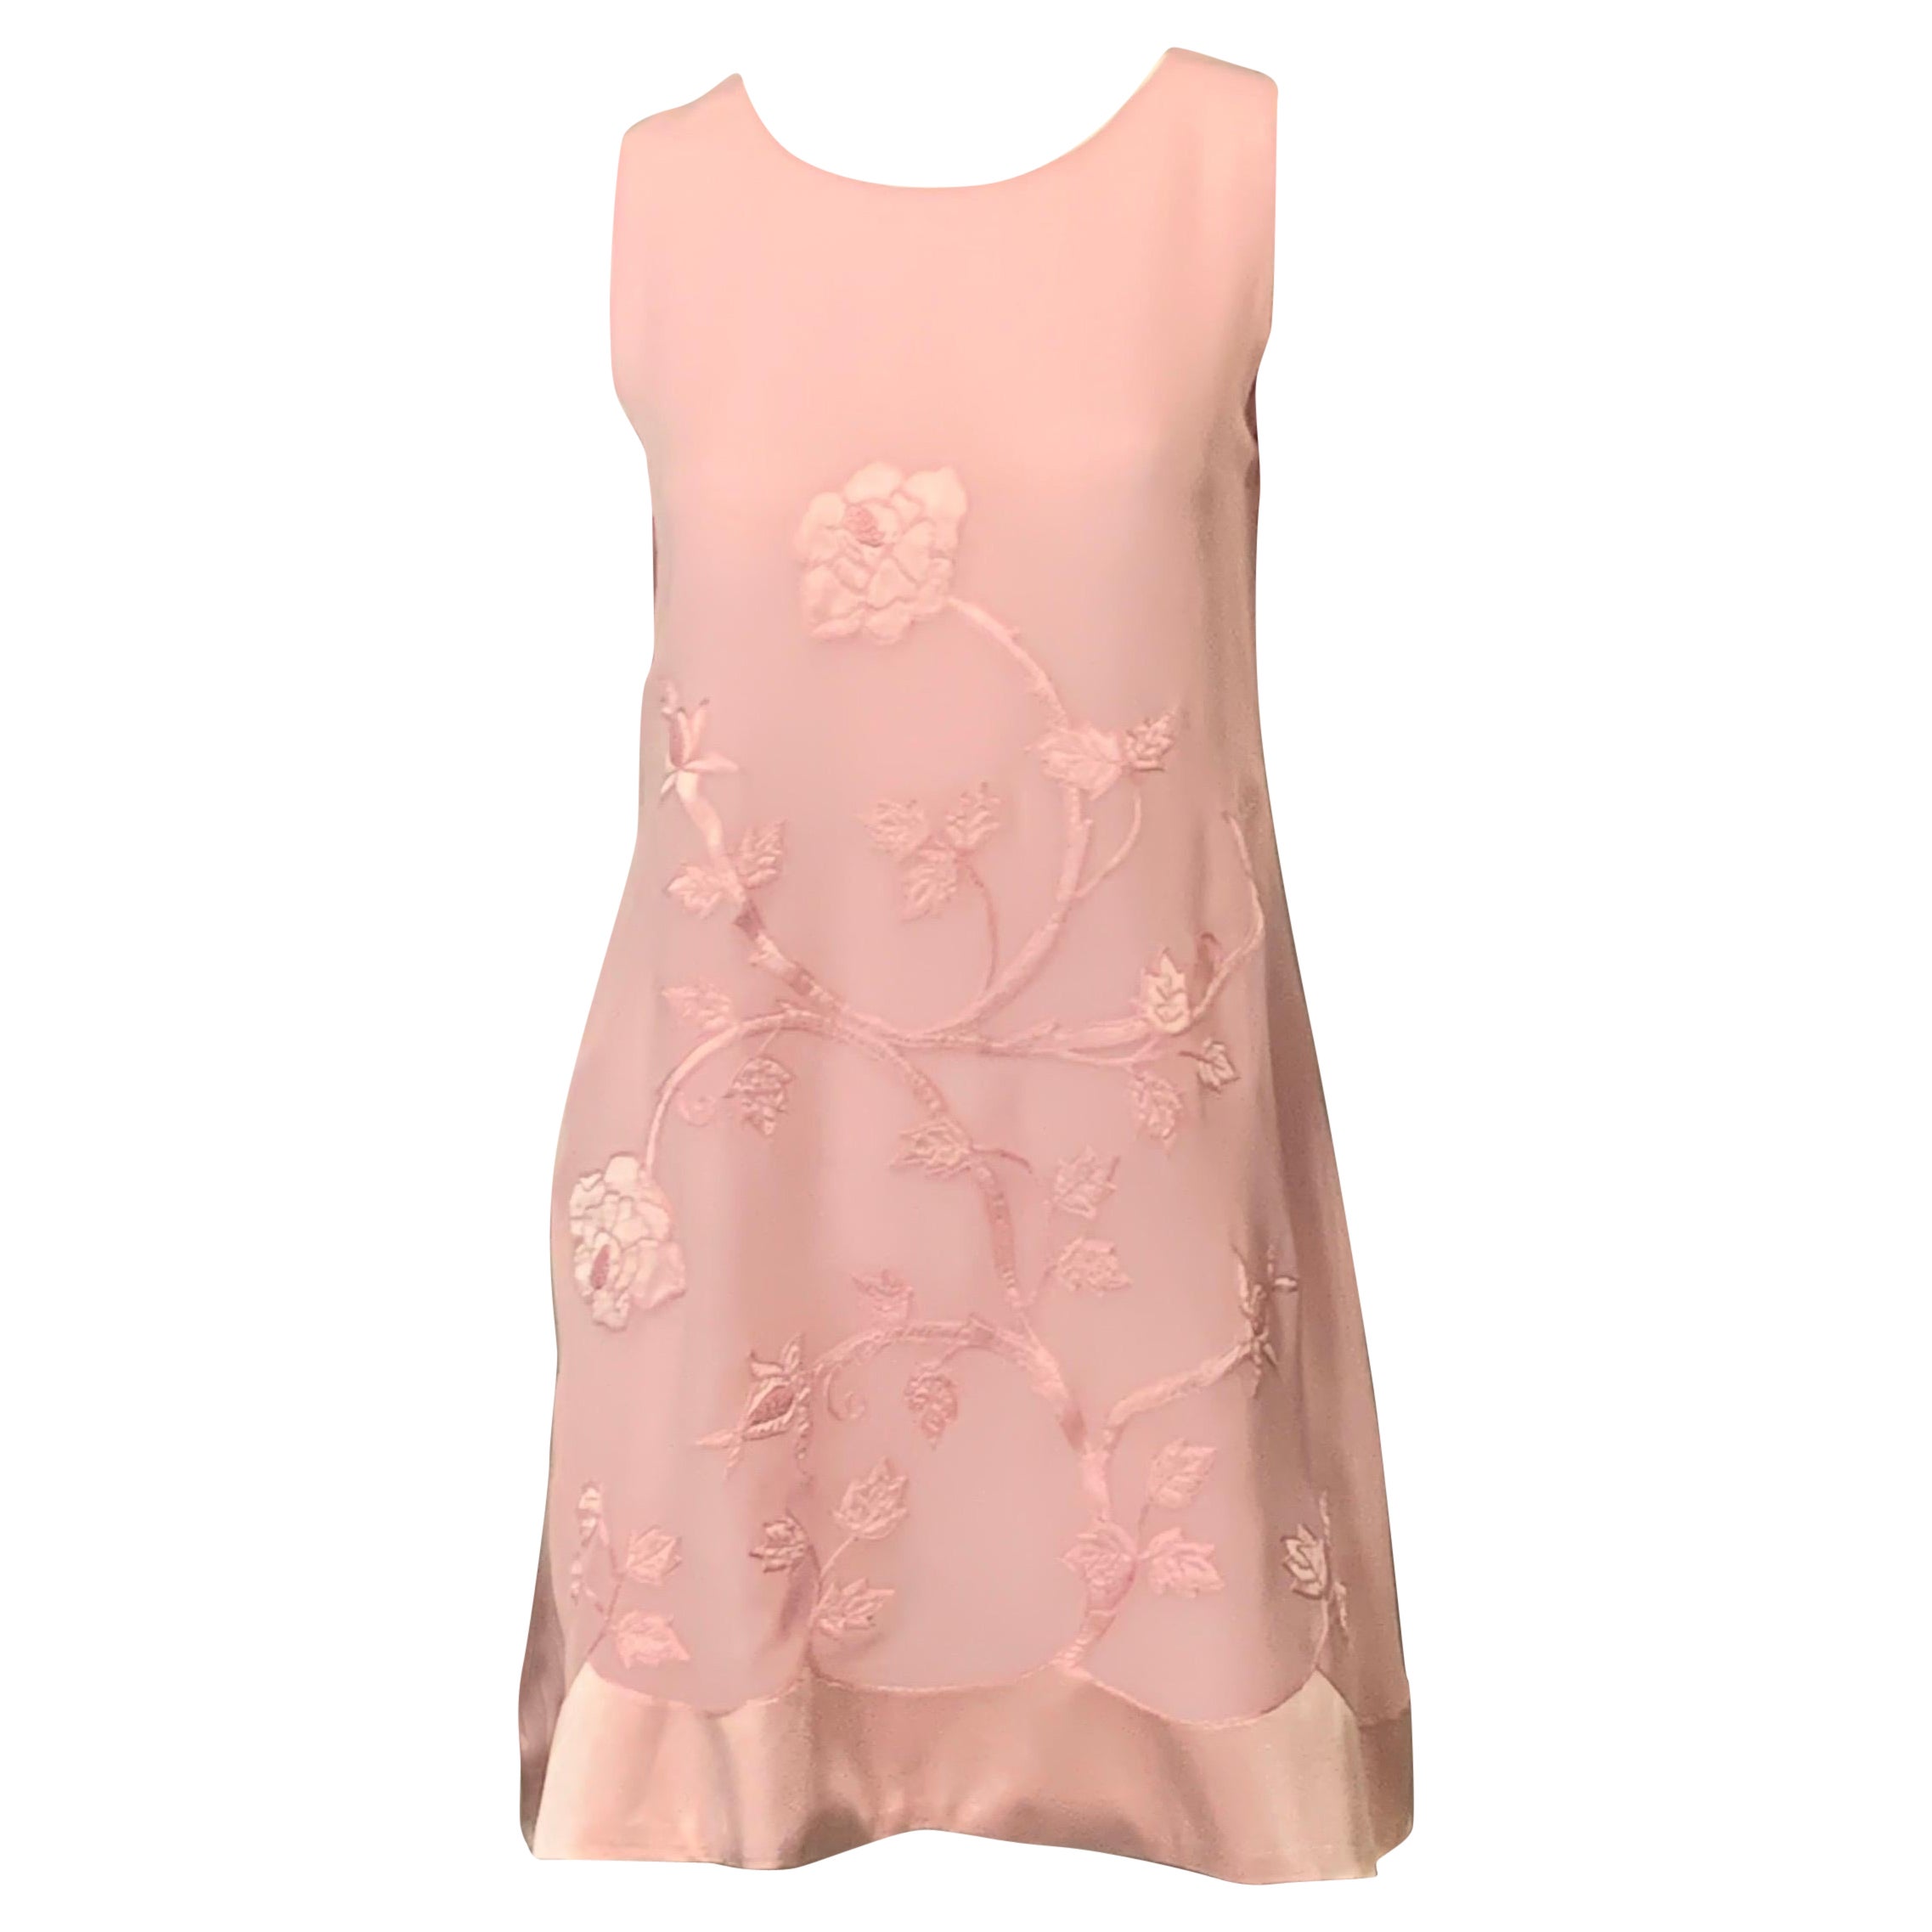 Alberta Ferretti Pink Silk Chiffon Floral Lingerie Dress Appliqued Satin Flowers For Sale